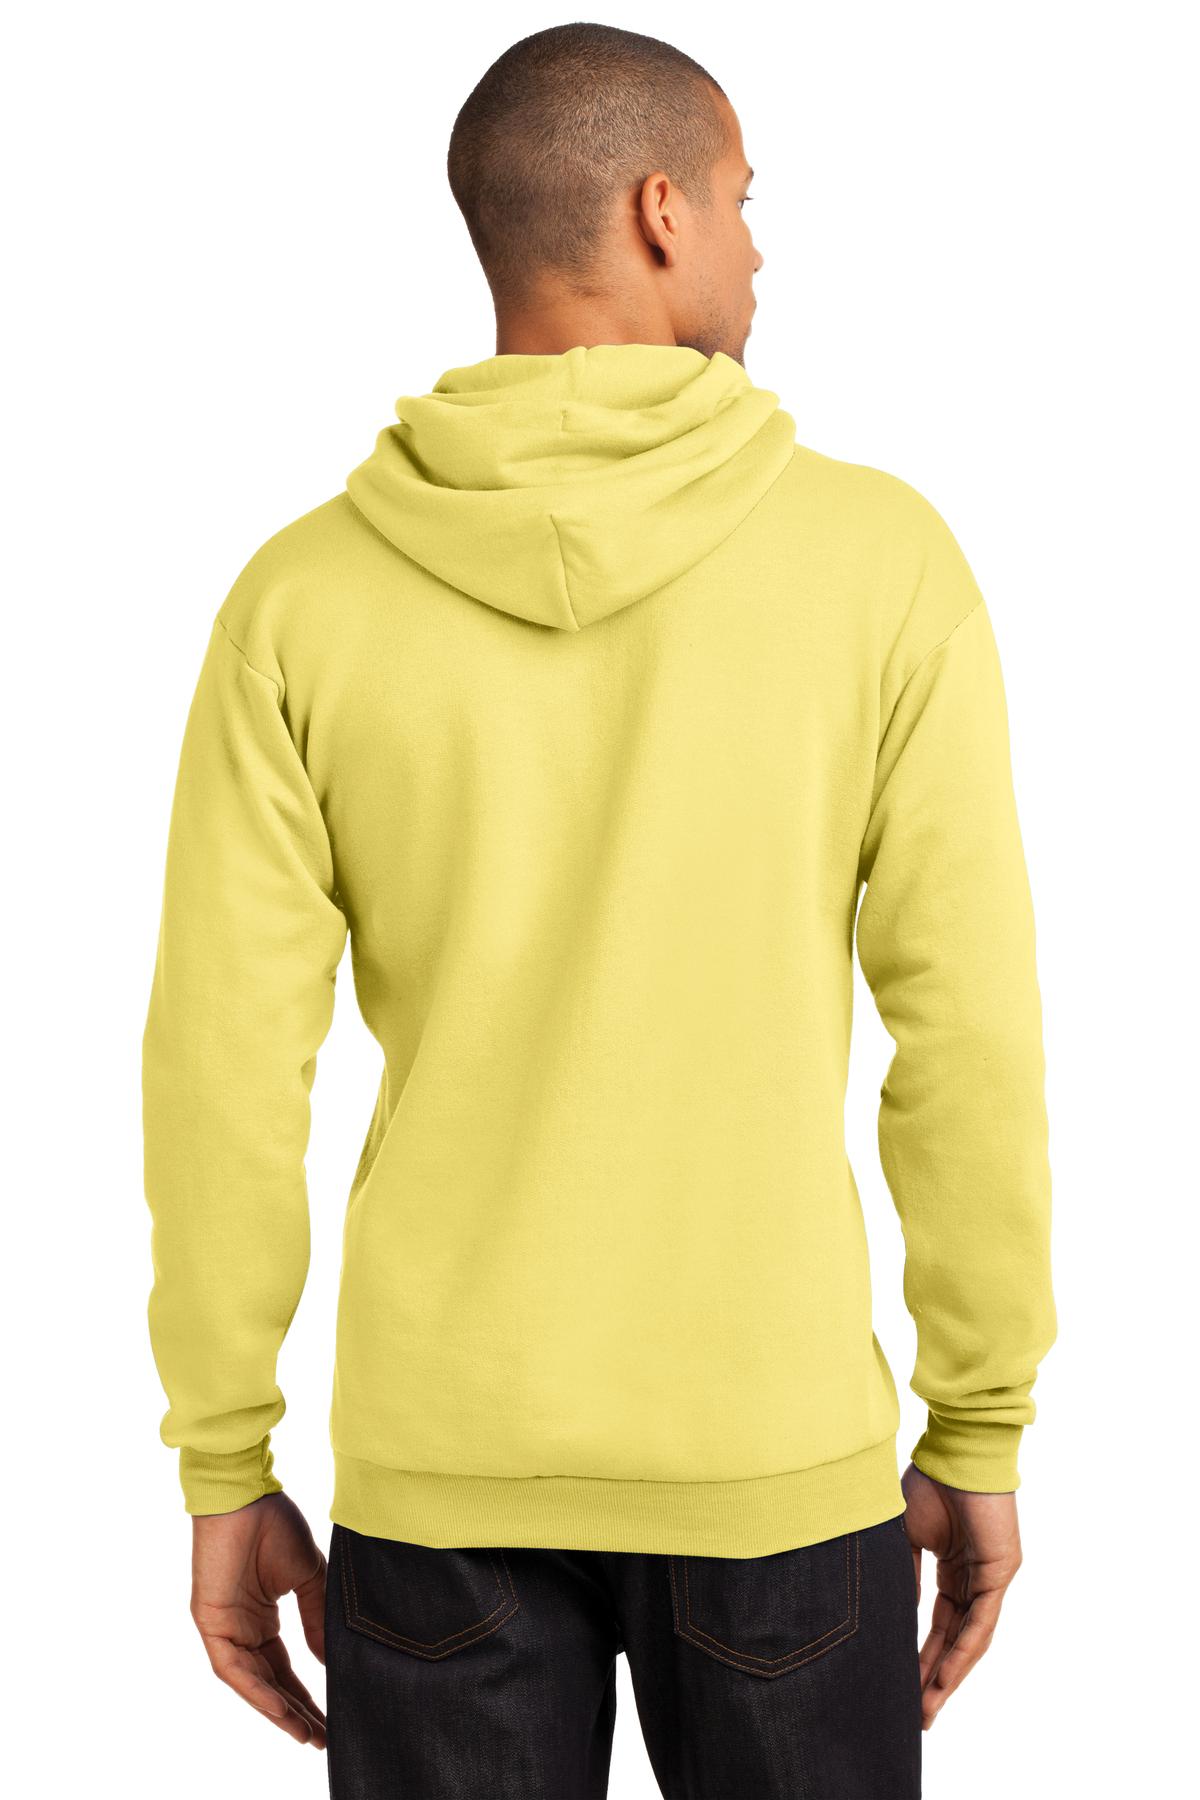 Port & Company® - Core Fleece Pullover Hooded Sweatshirt. PC78H [Yellow] - DFW Impression